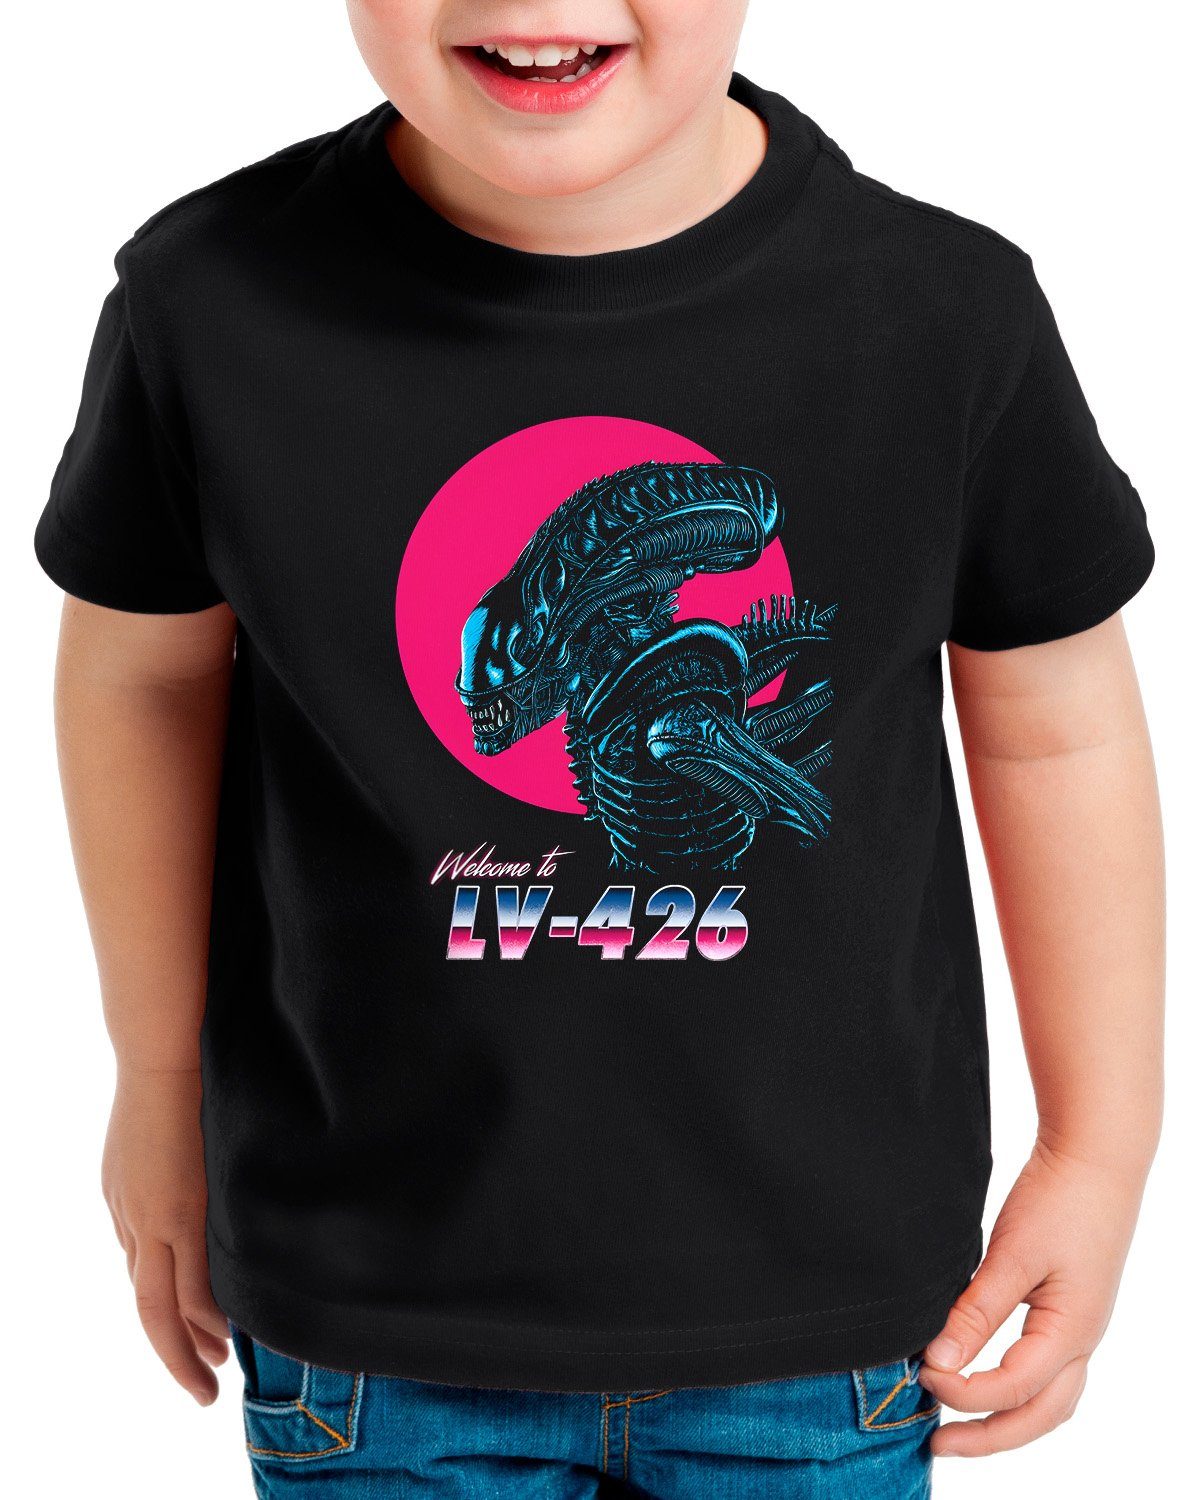 scott T-Shirt to Kinder xenomorph predator alien style3 ridley Print-Shirt LV-426 Come